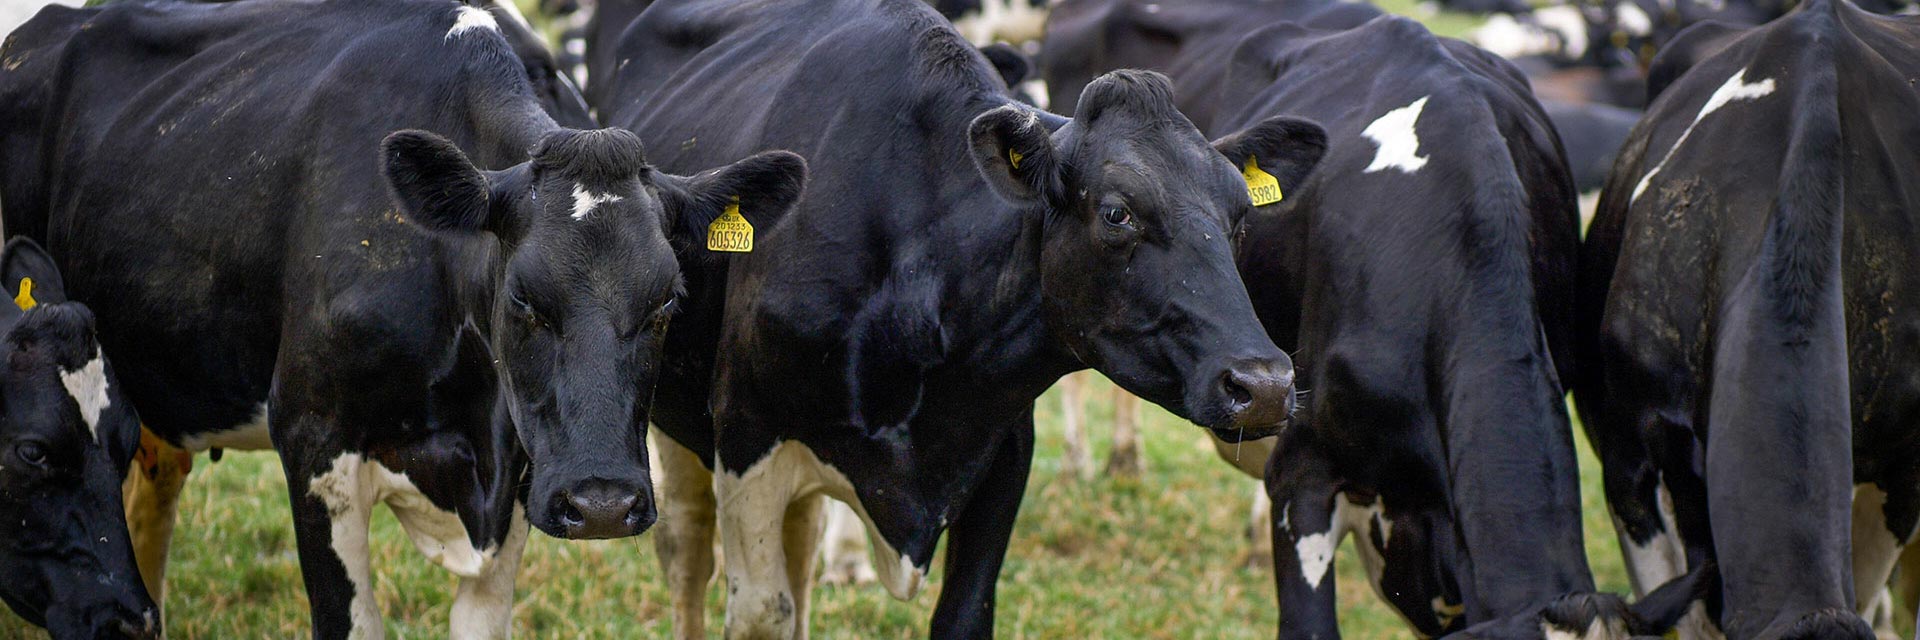 Stilton cheese dairy cows in a field